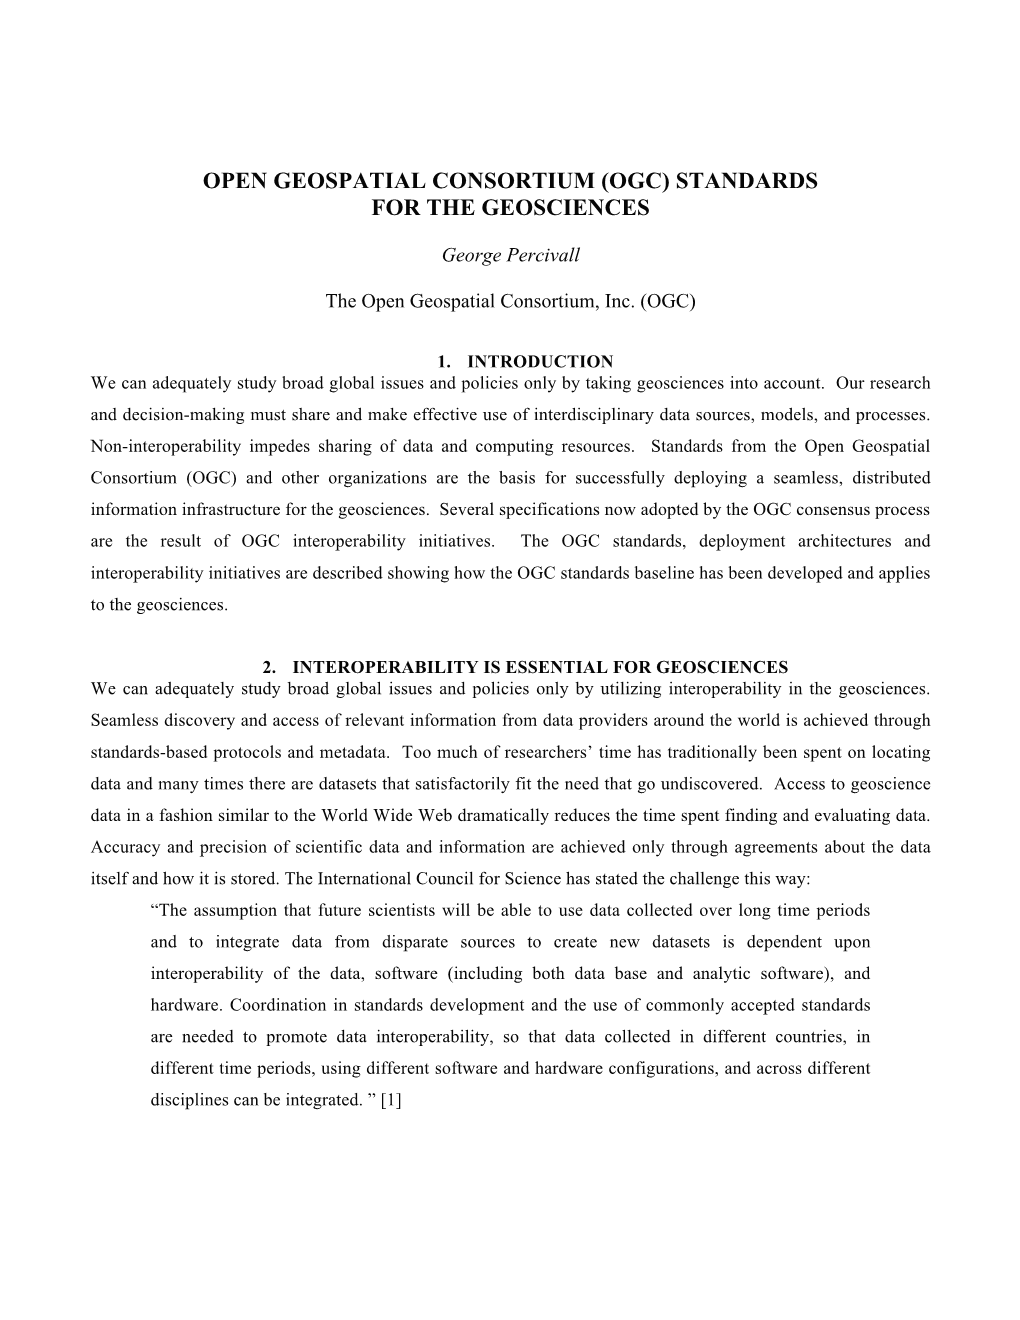 Open Geospatial Consortium (Ogc) Standards for the Geosciences